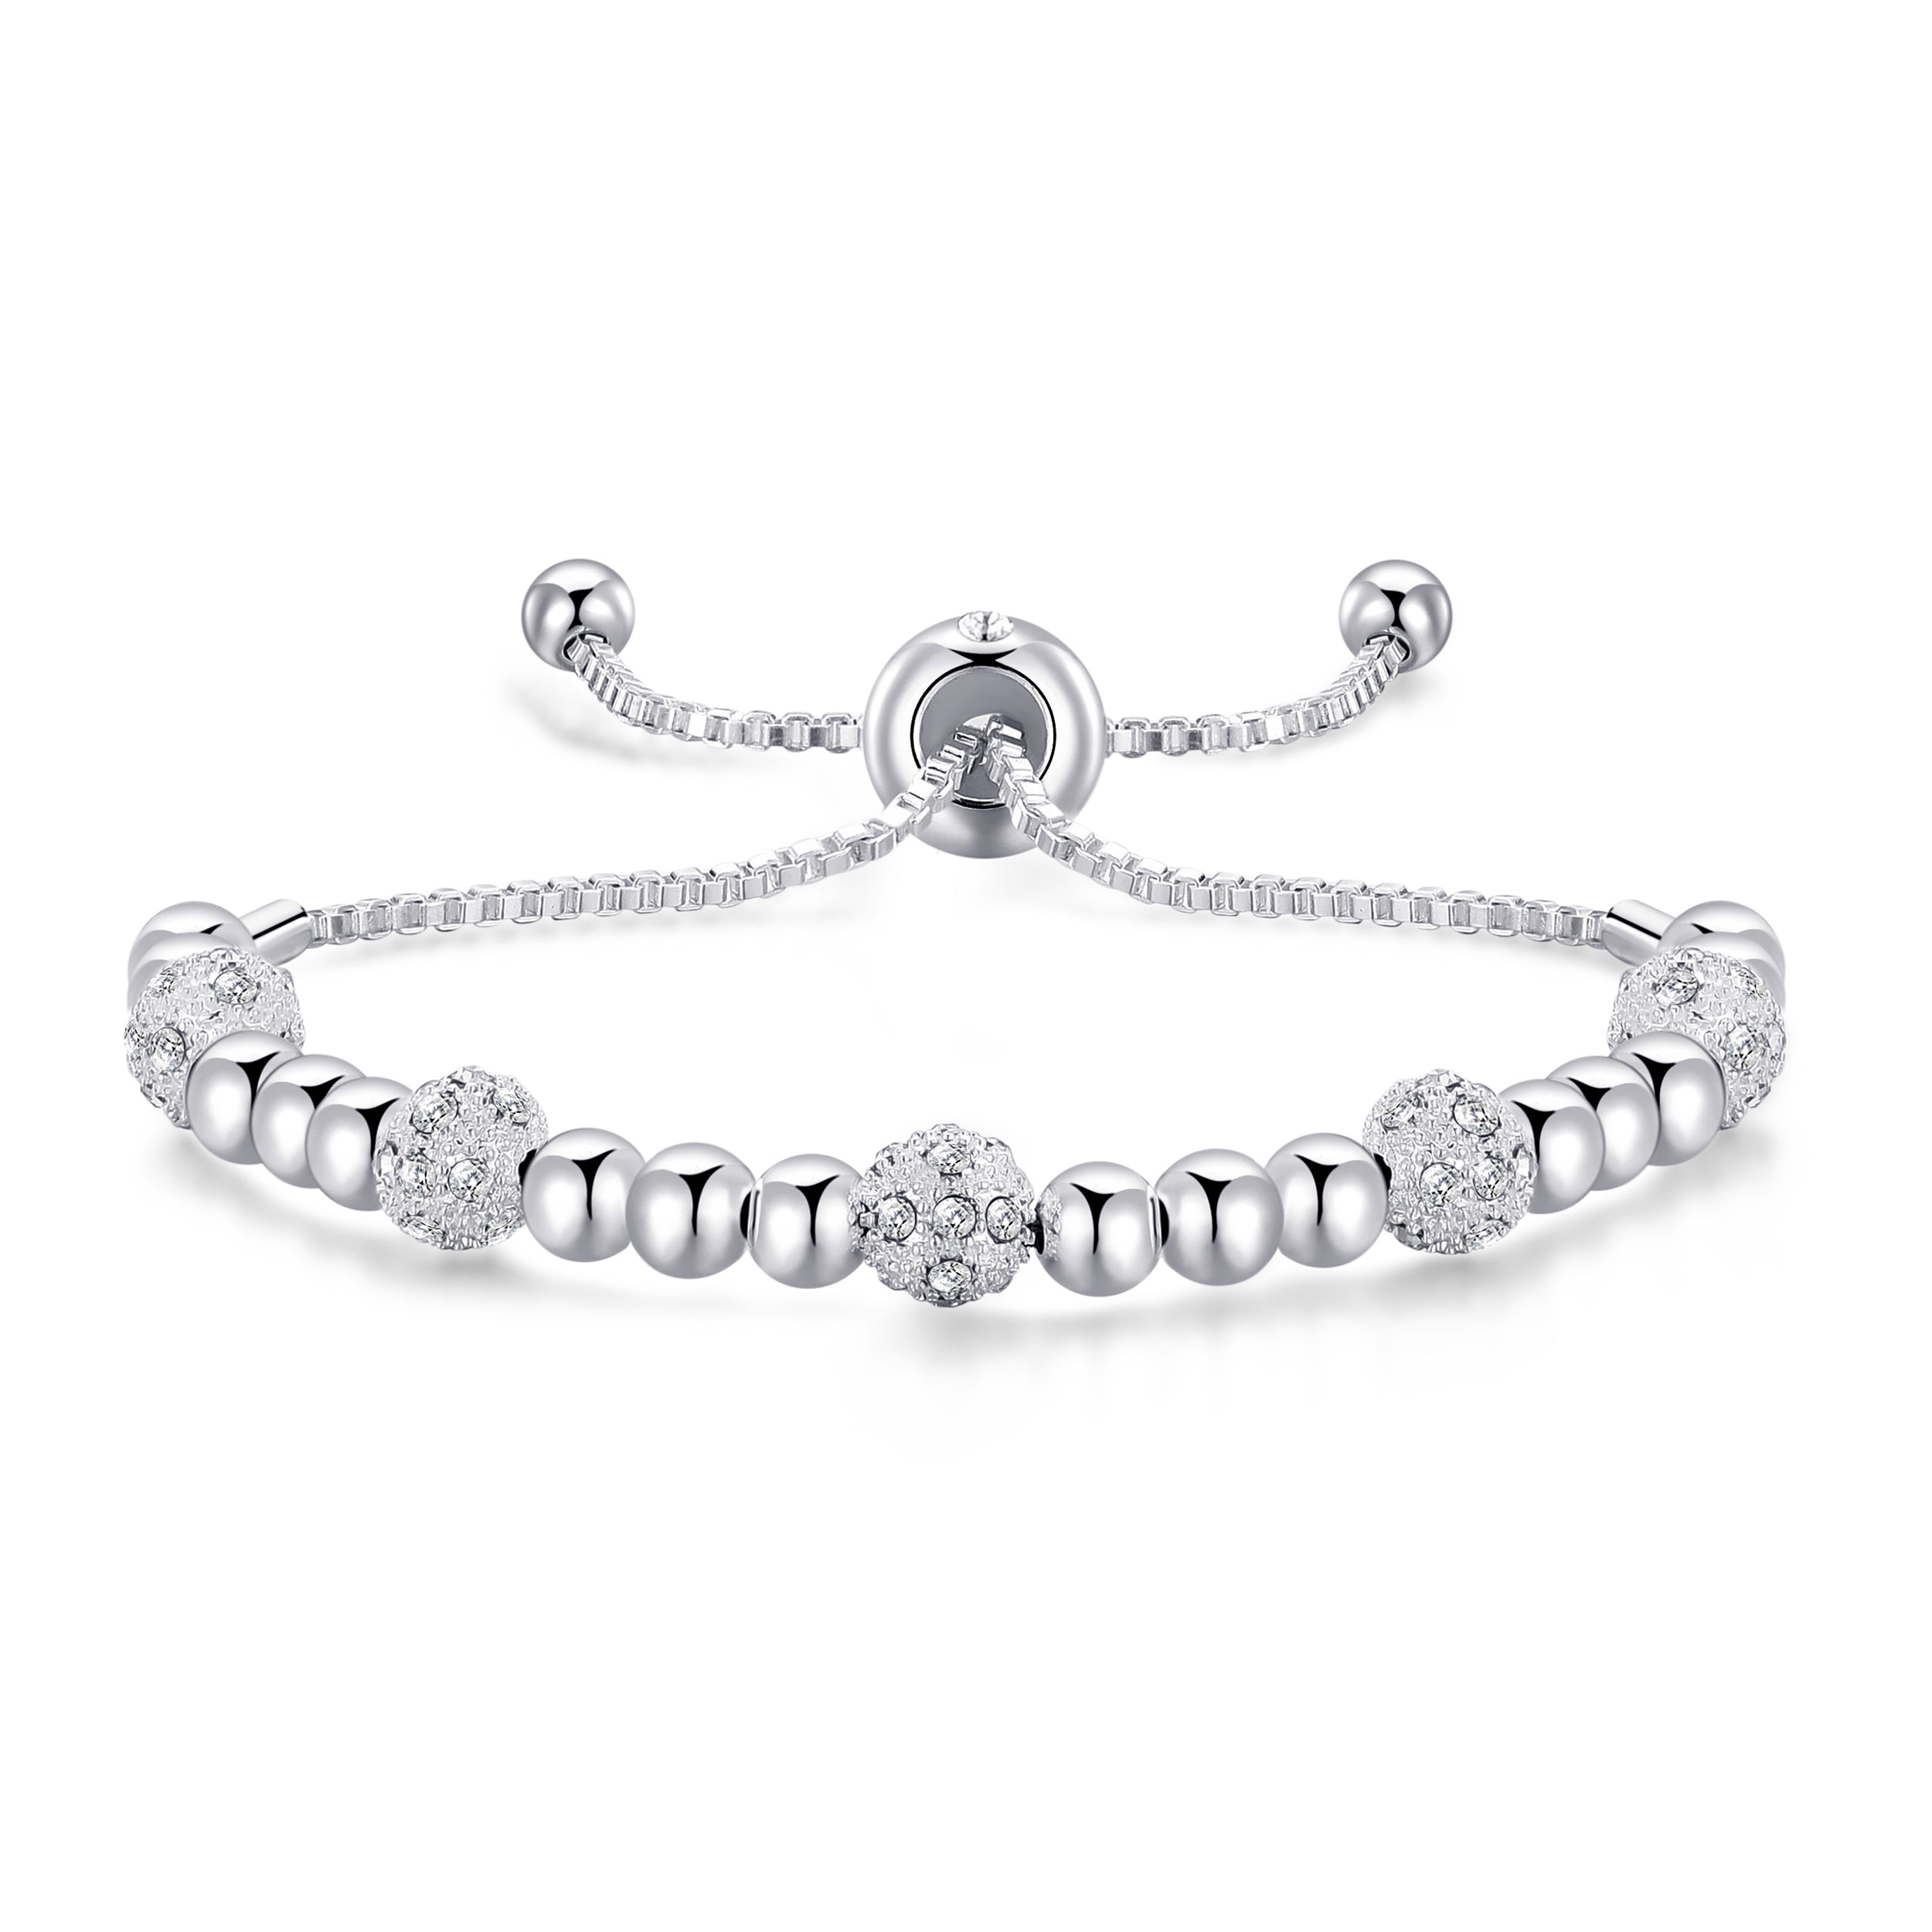 Beaded Friendship Bracelet Created with Zircondia® Crystals by Philip Jones Jewellery